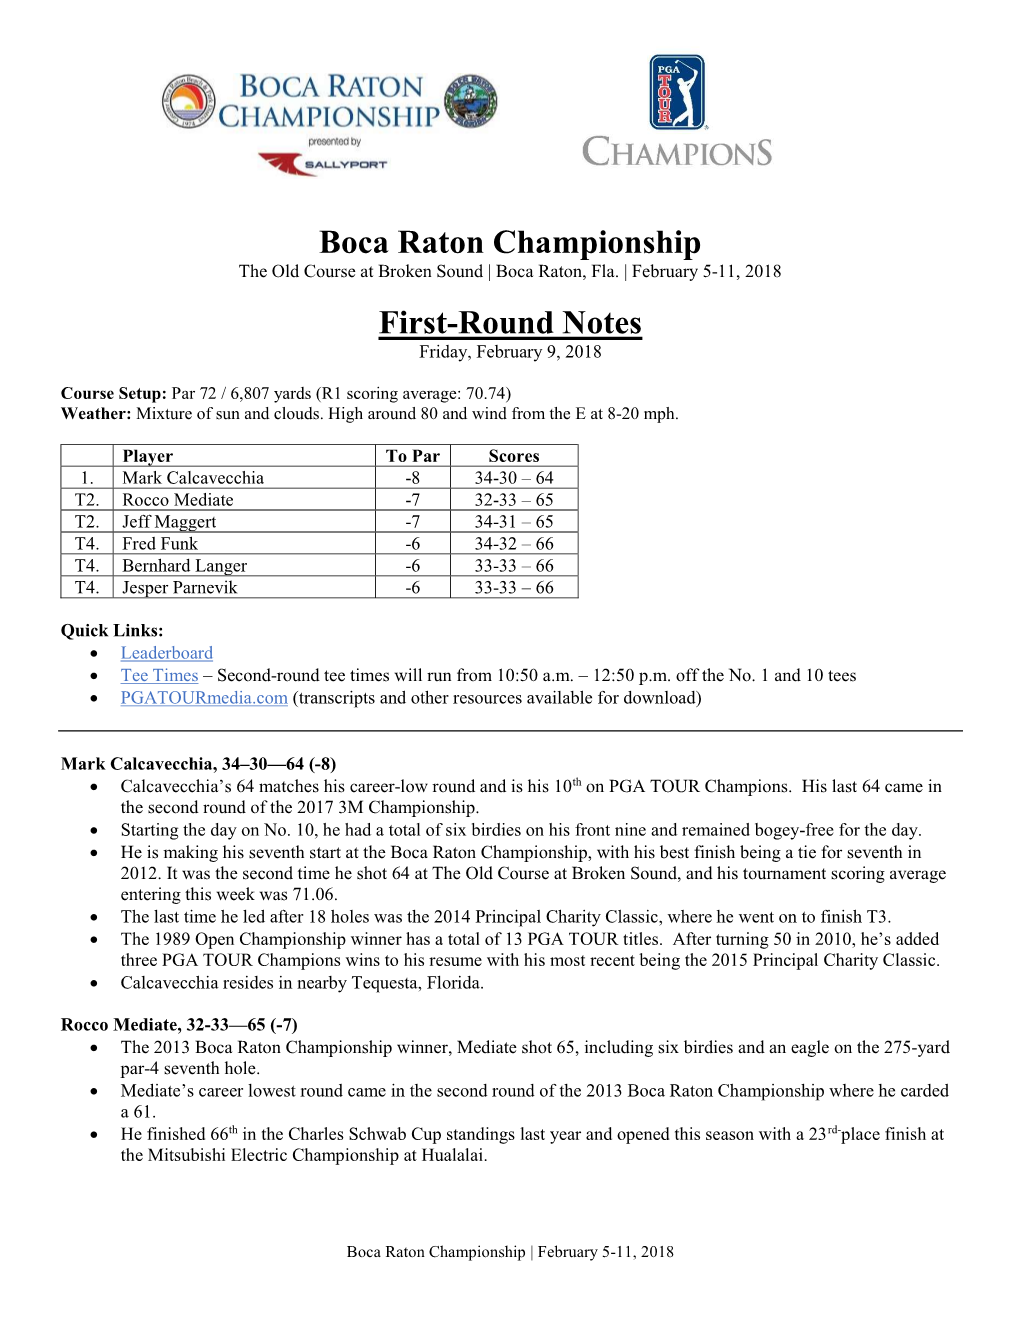 Boca Raton Championship First-Round Notes